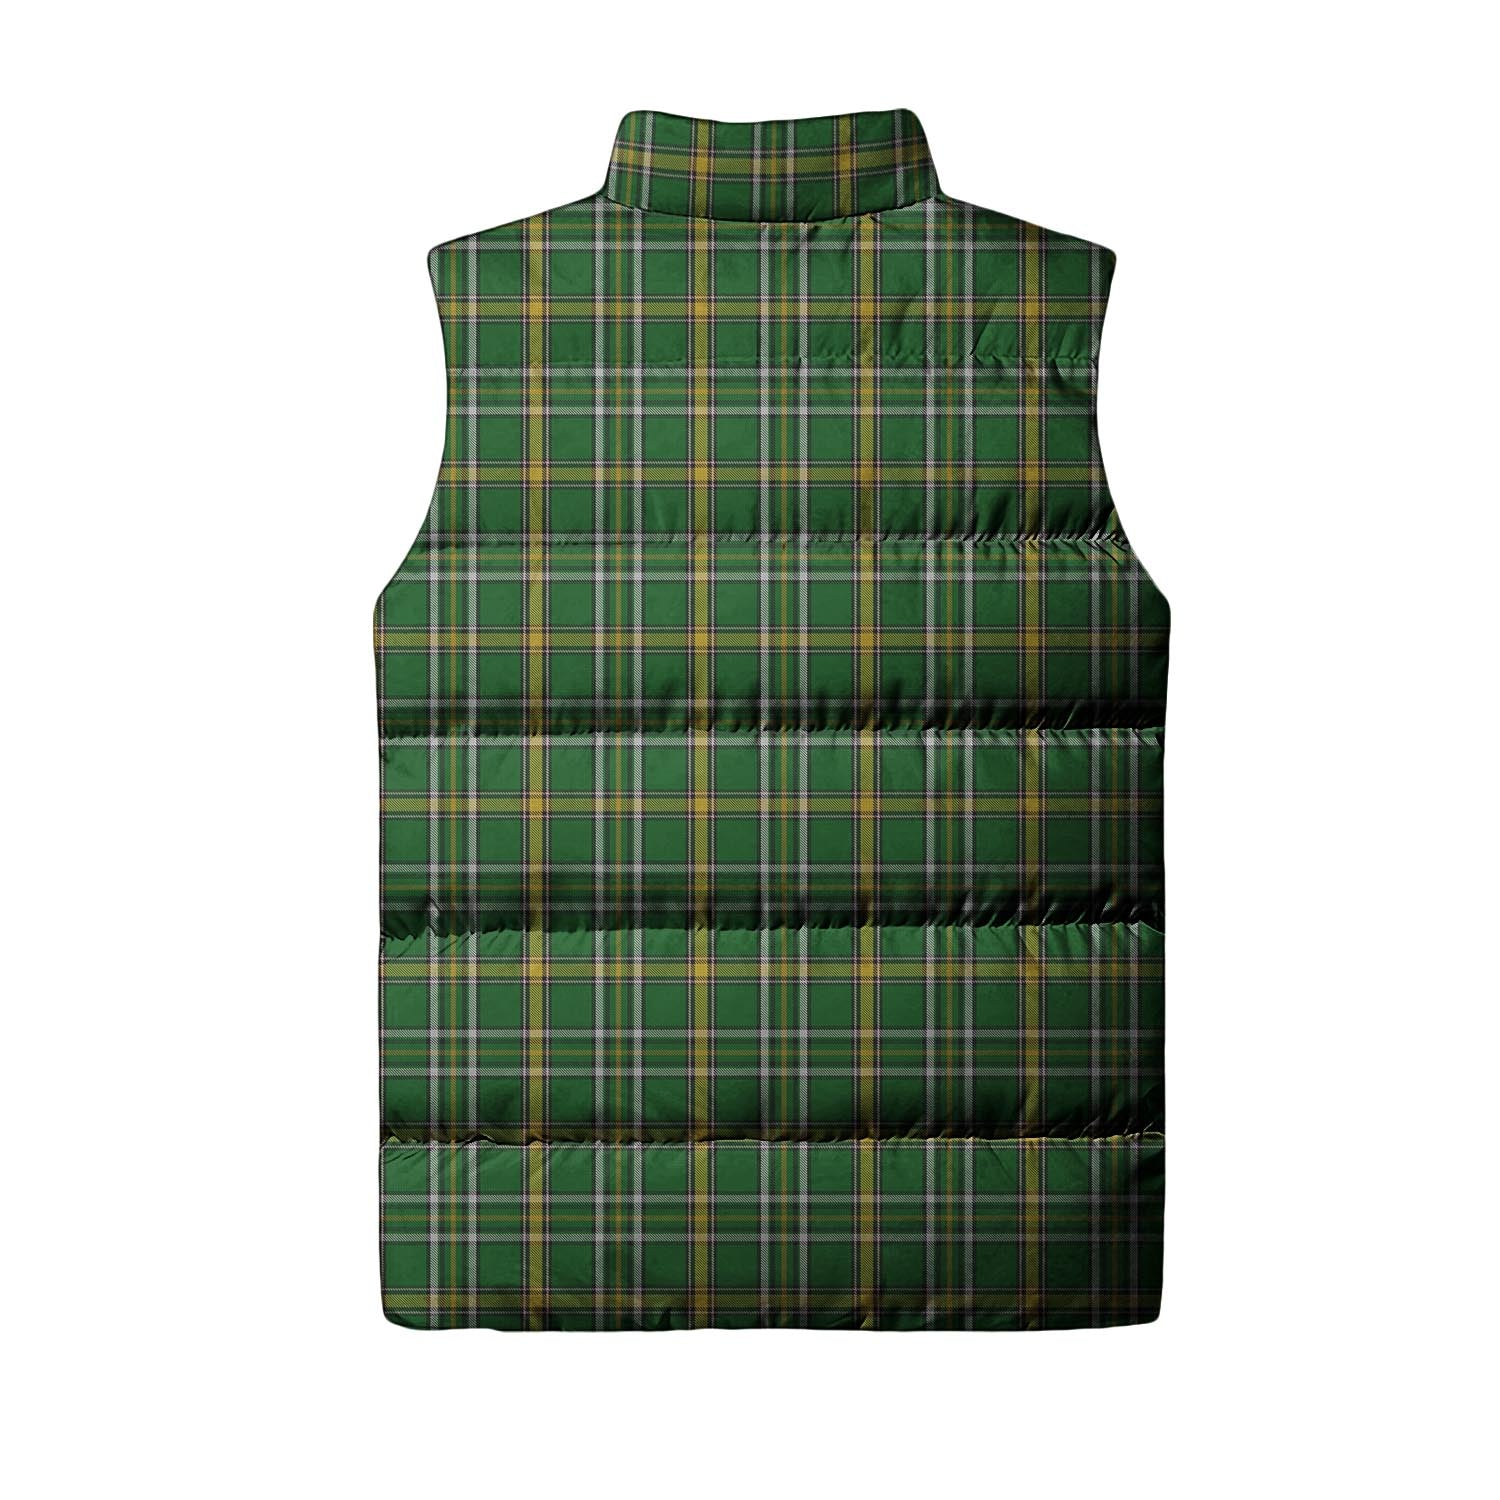 Offaly County Ireland Tartan Sleeveless Puffer Jacket - Tartanvibesclothing